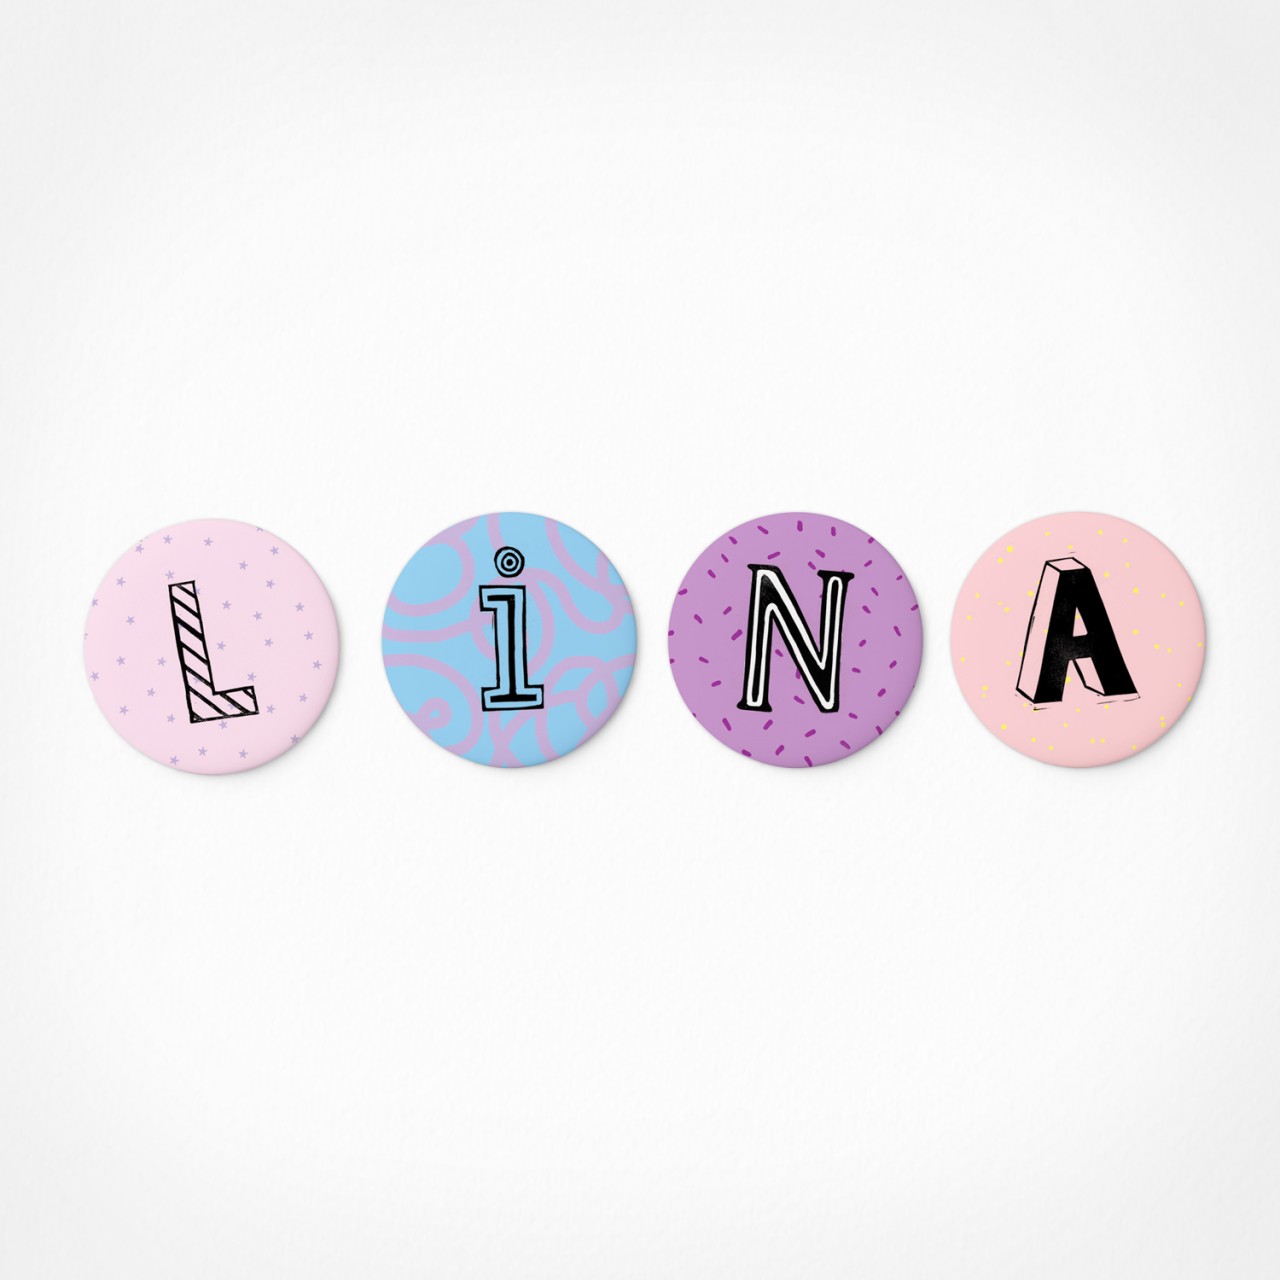 Lina | Magnetbuchstaben Set | 4 Magnete